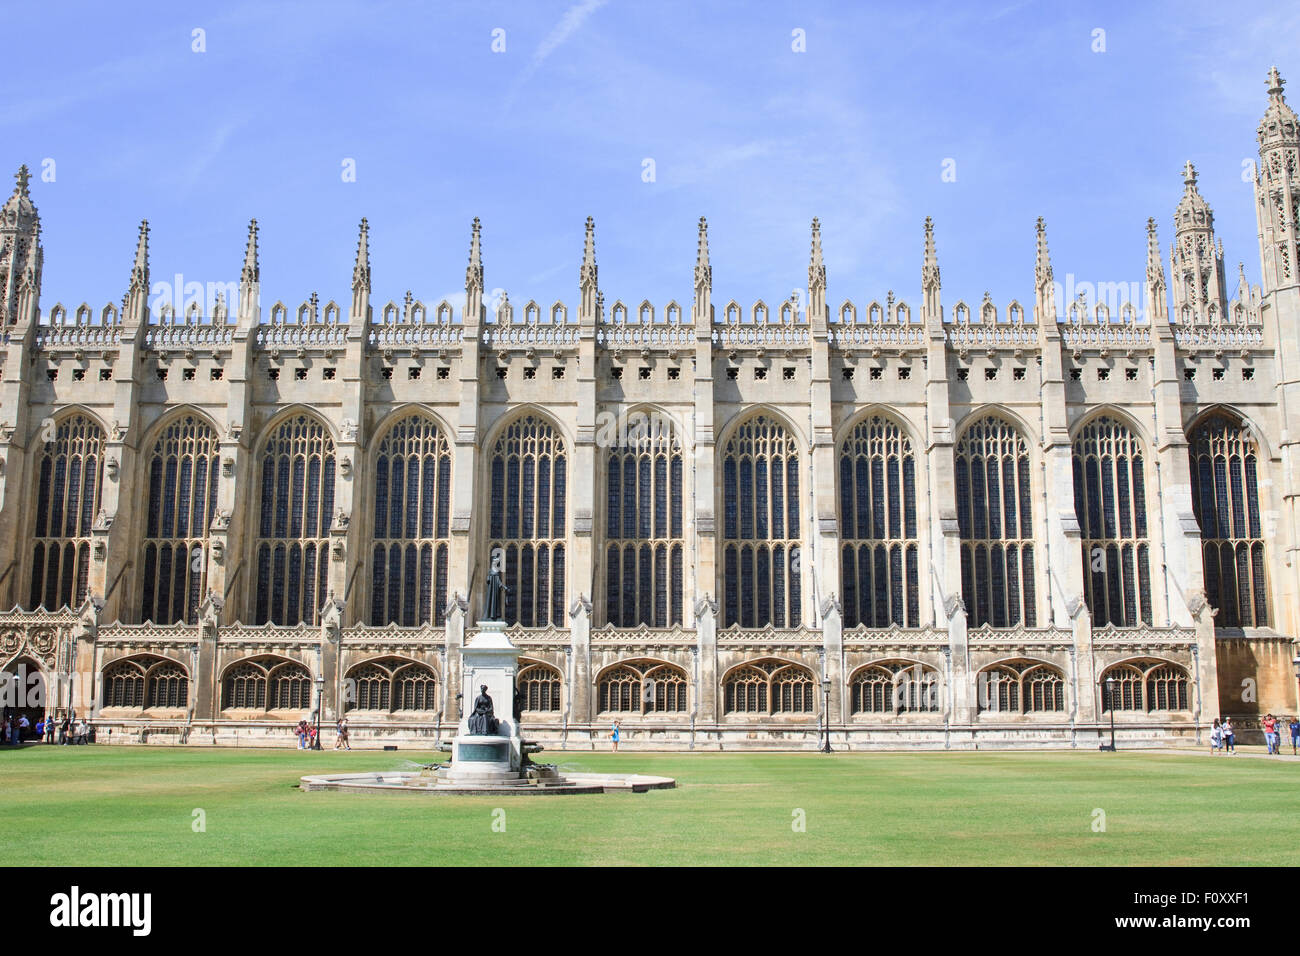 La capilla de King's College en Cambridge, Inglaterra. Foto de stock